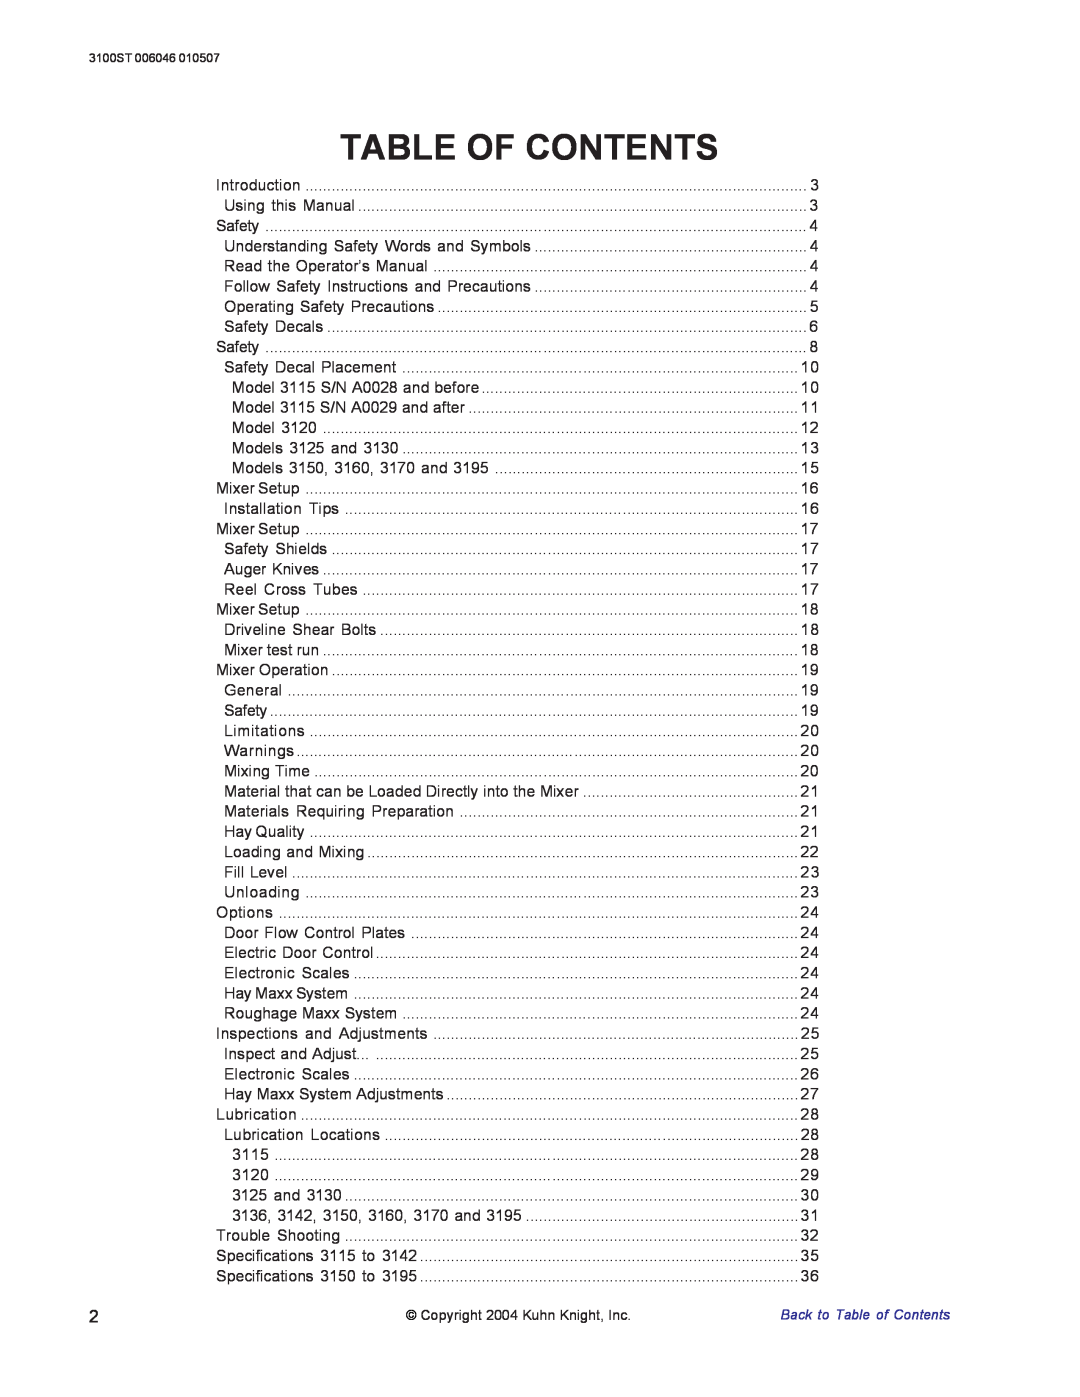 Kuhn Rikon 3100 instruction manual Table Of Contents, Copyright 2004 Kuhn Knight, Inc 